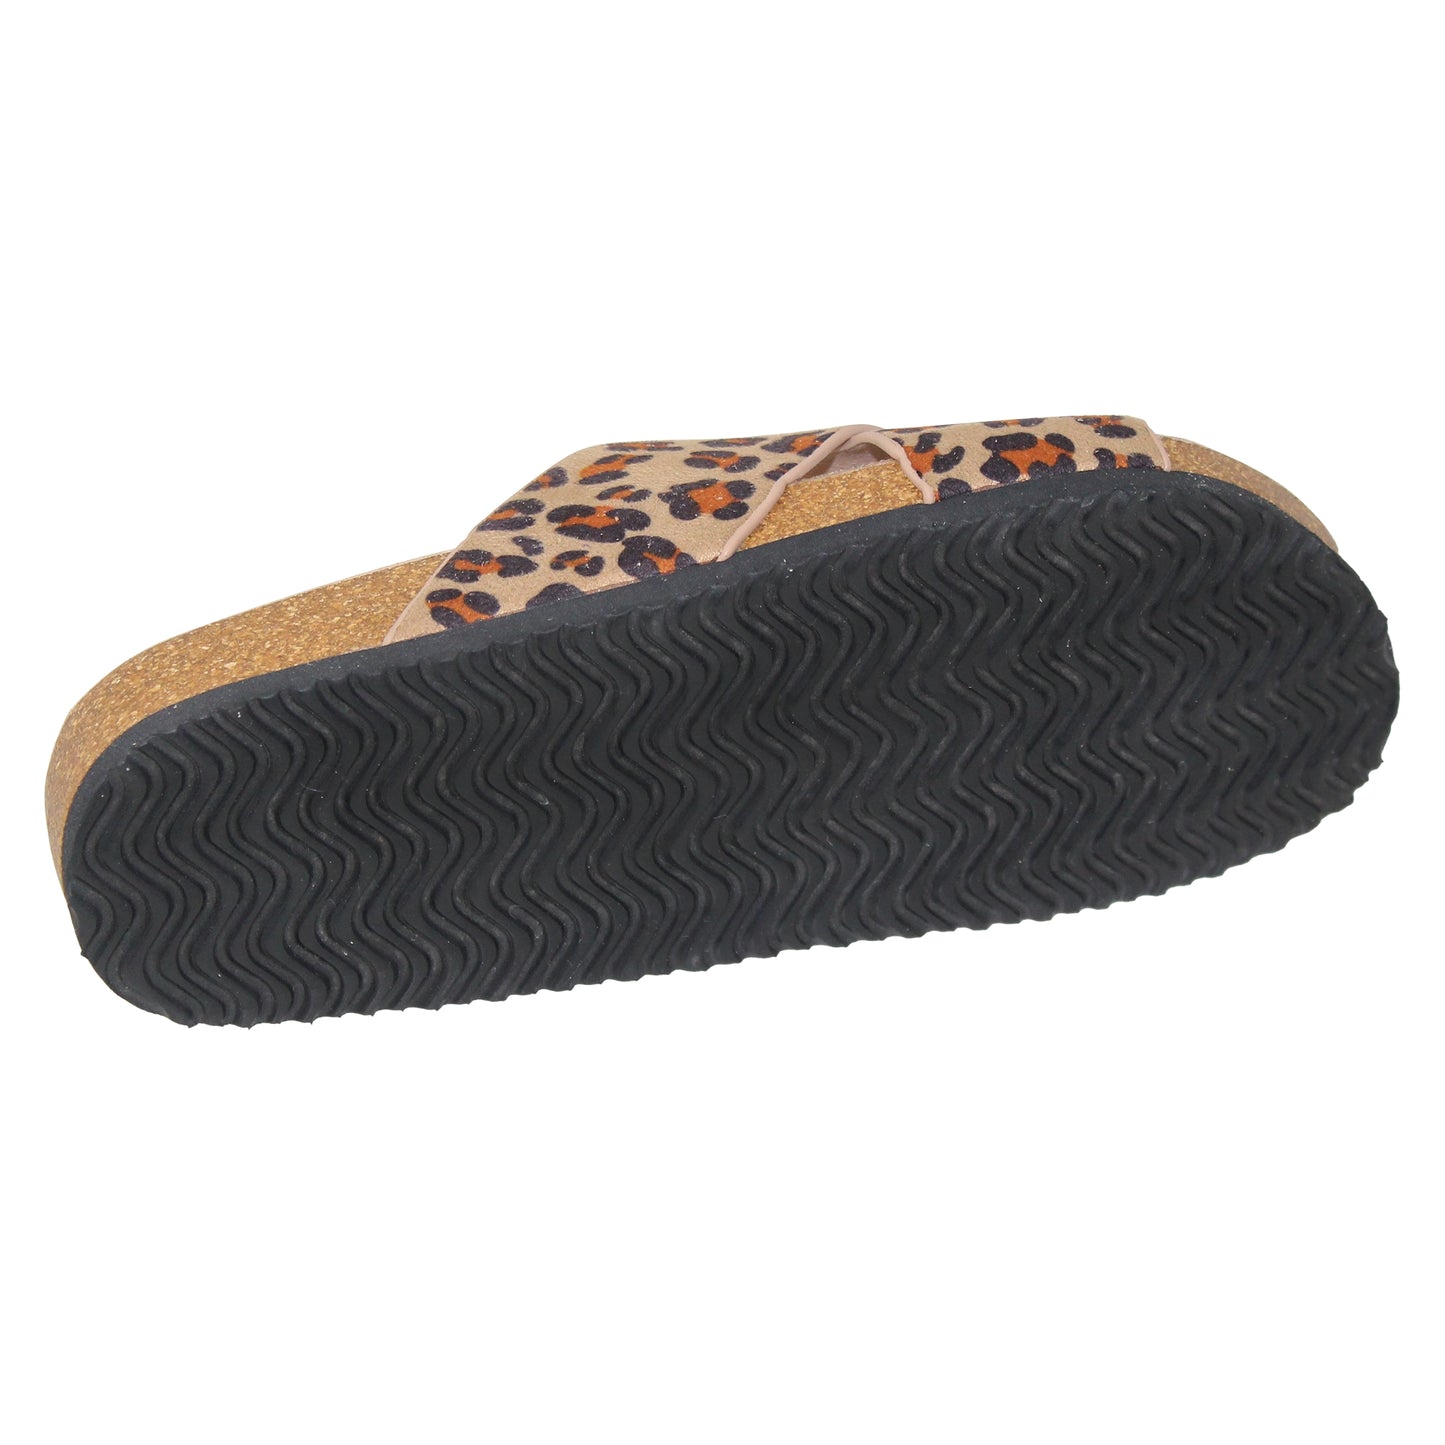 Women's Classic Criss-Cross Comfort Sandals Cork Leopard